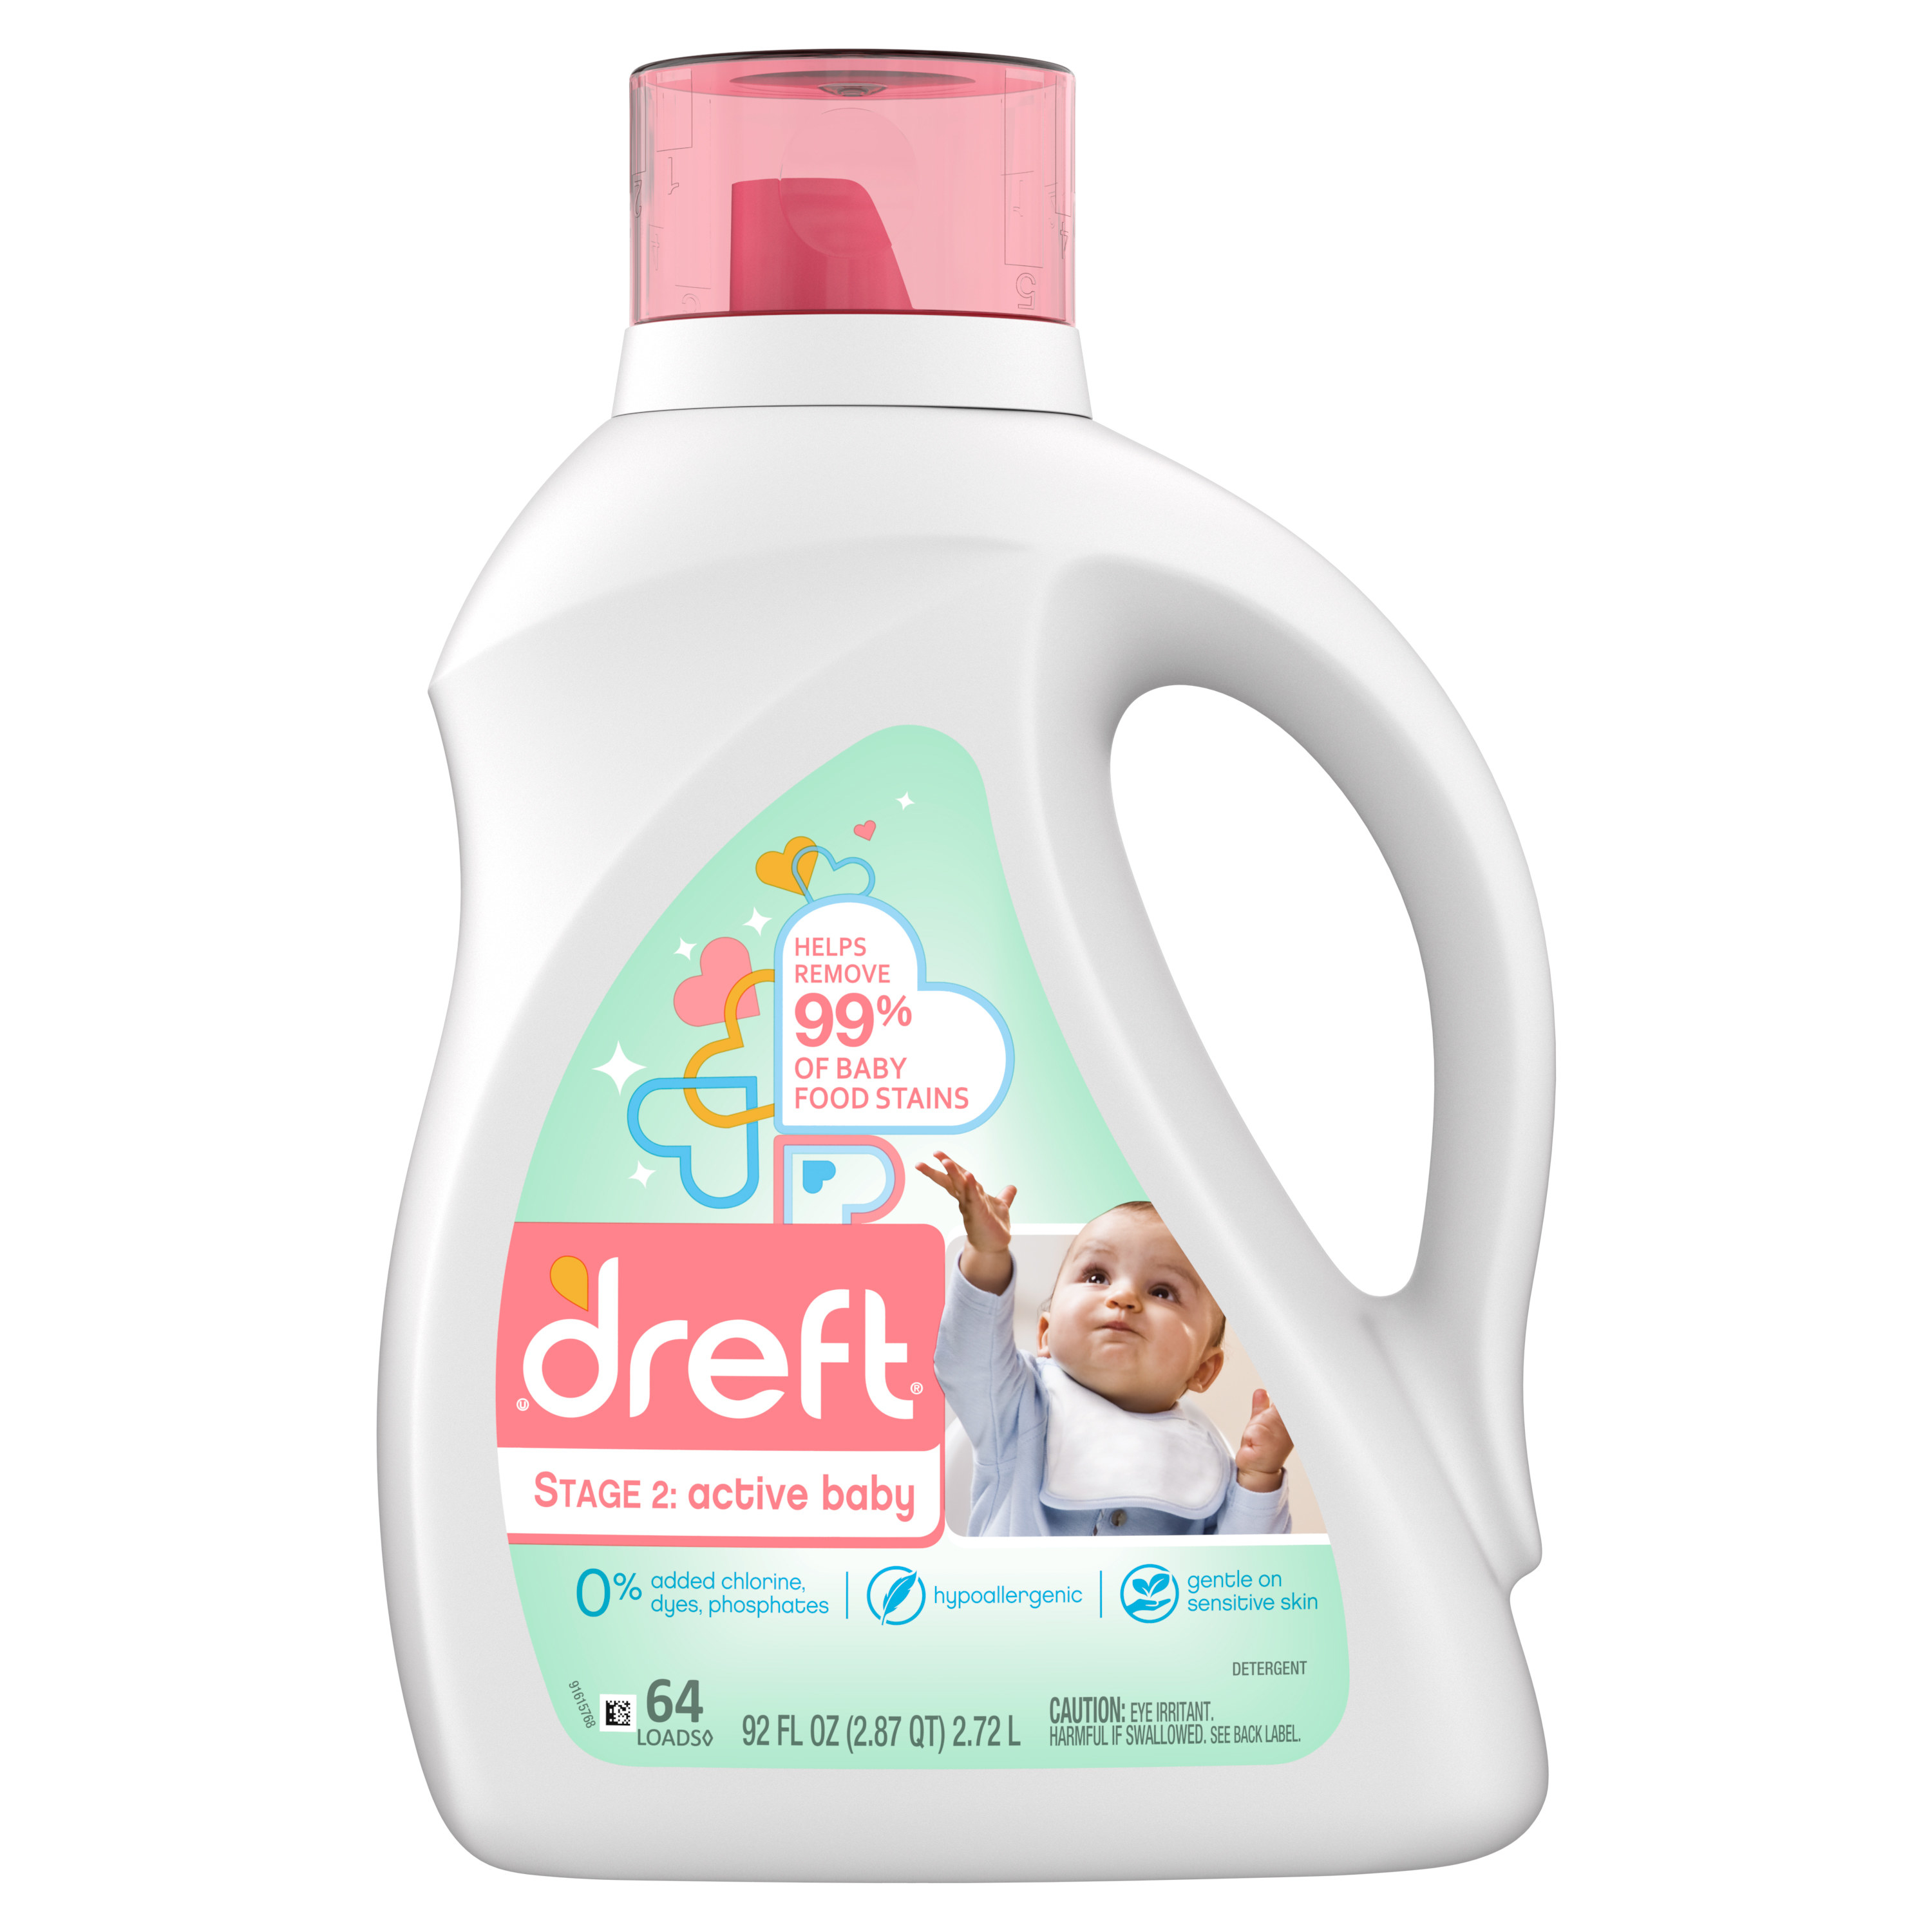 A bottle of Dreft Stage 2 laundry detergent